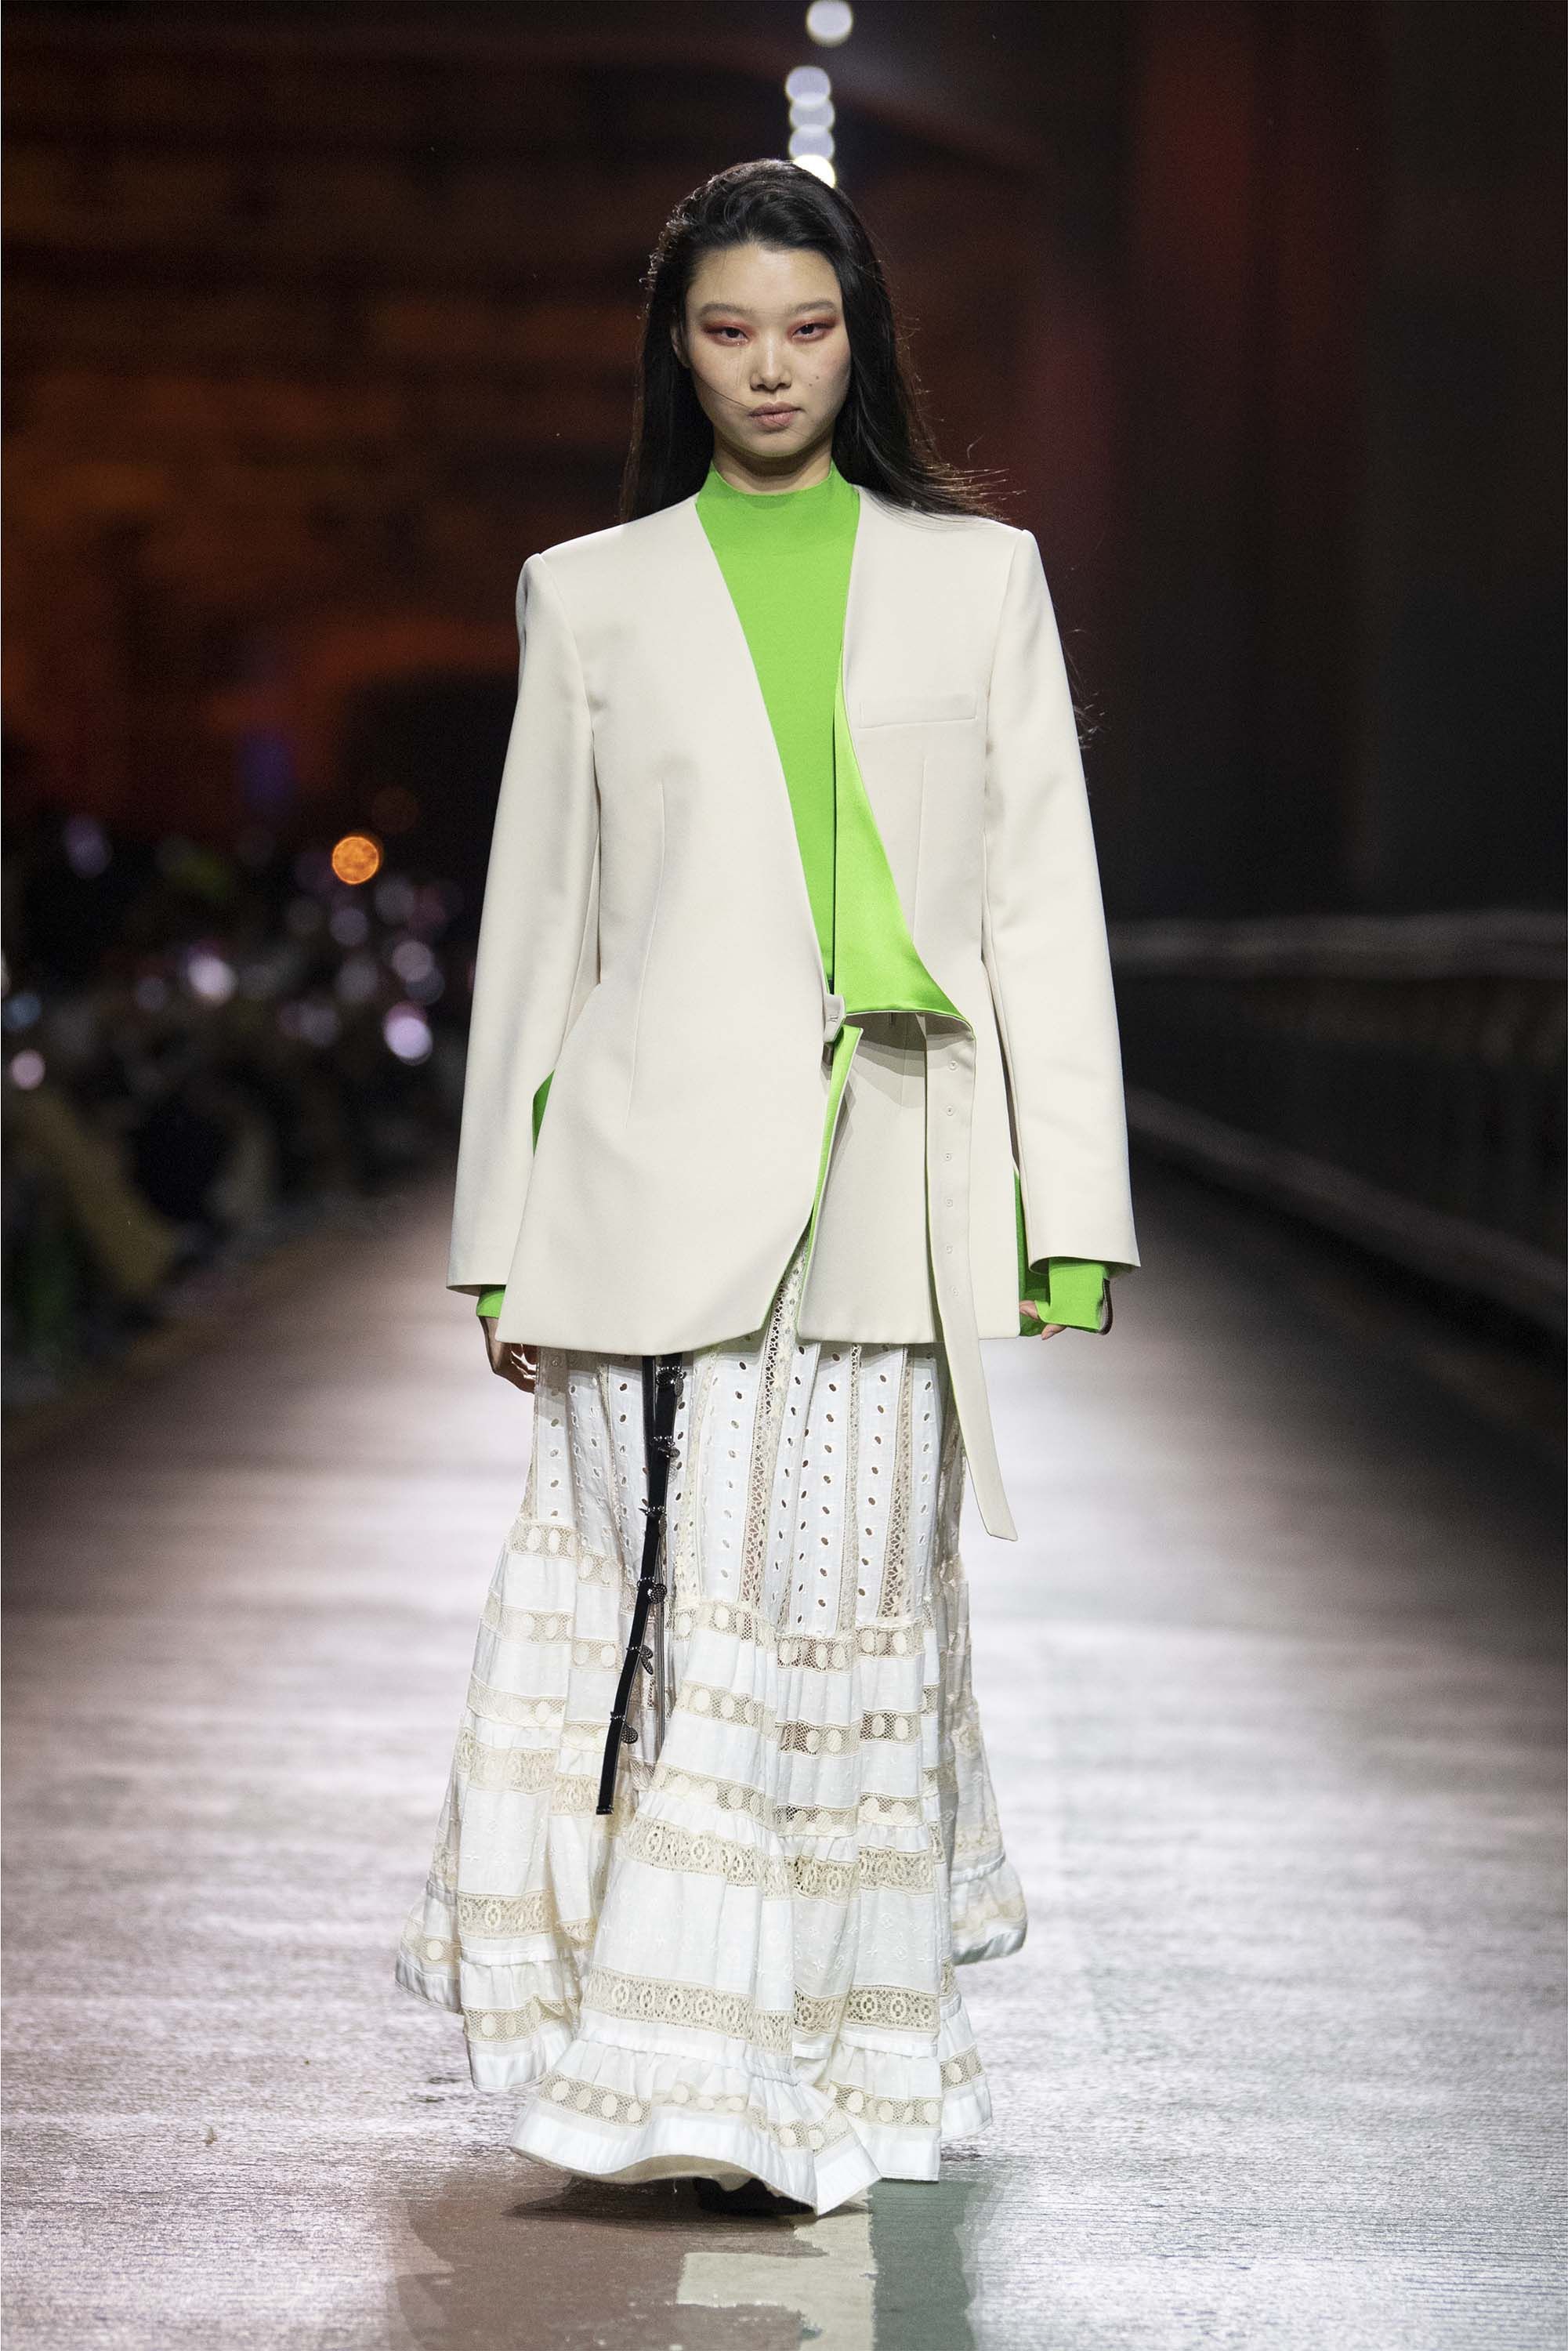 Louis Vuitton Seoul Women's Fashion Show Highlights